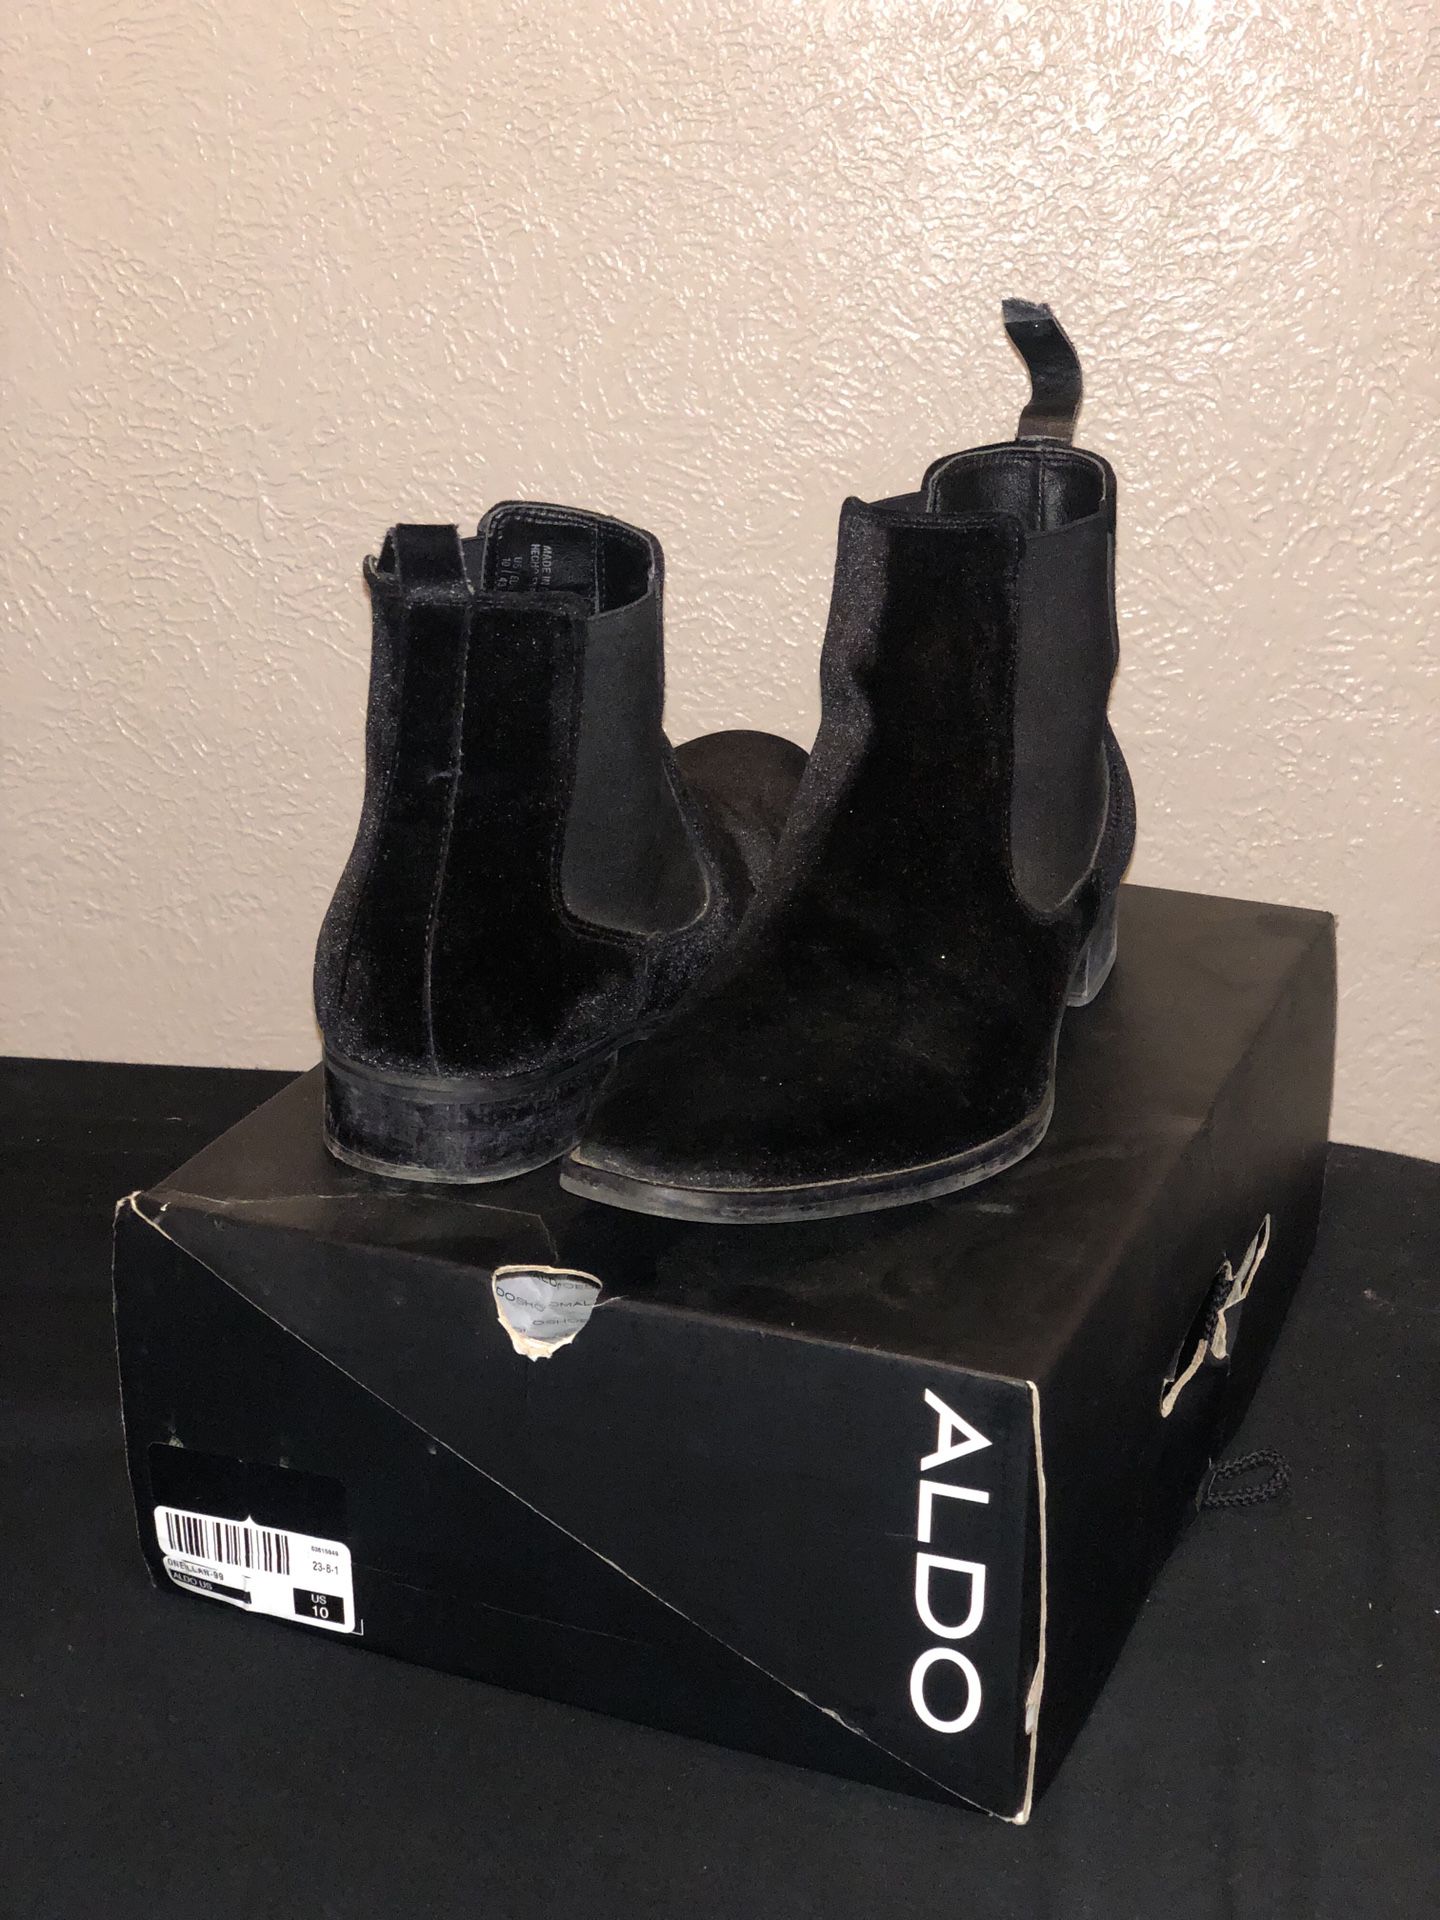 Aldo Men's boots